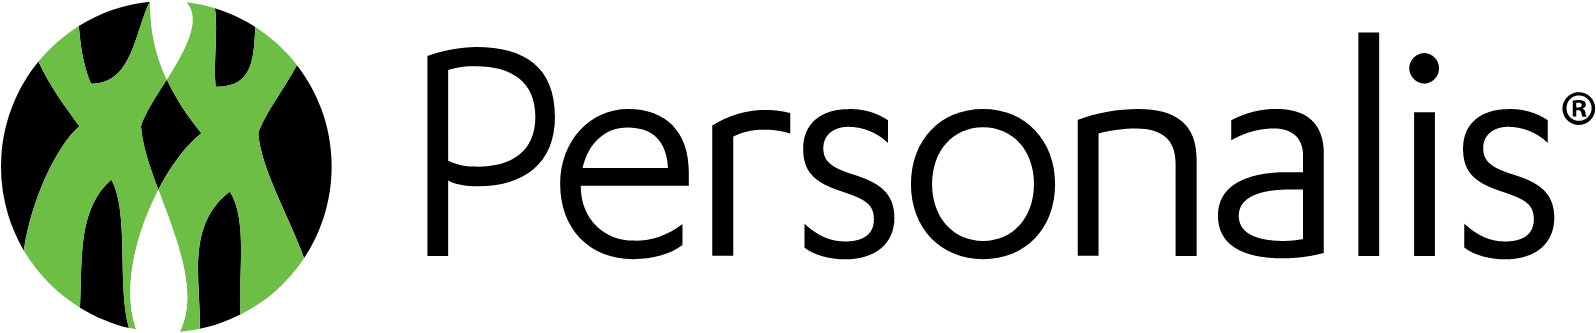 Personalis logo large (transparent PNG)